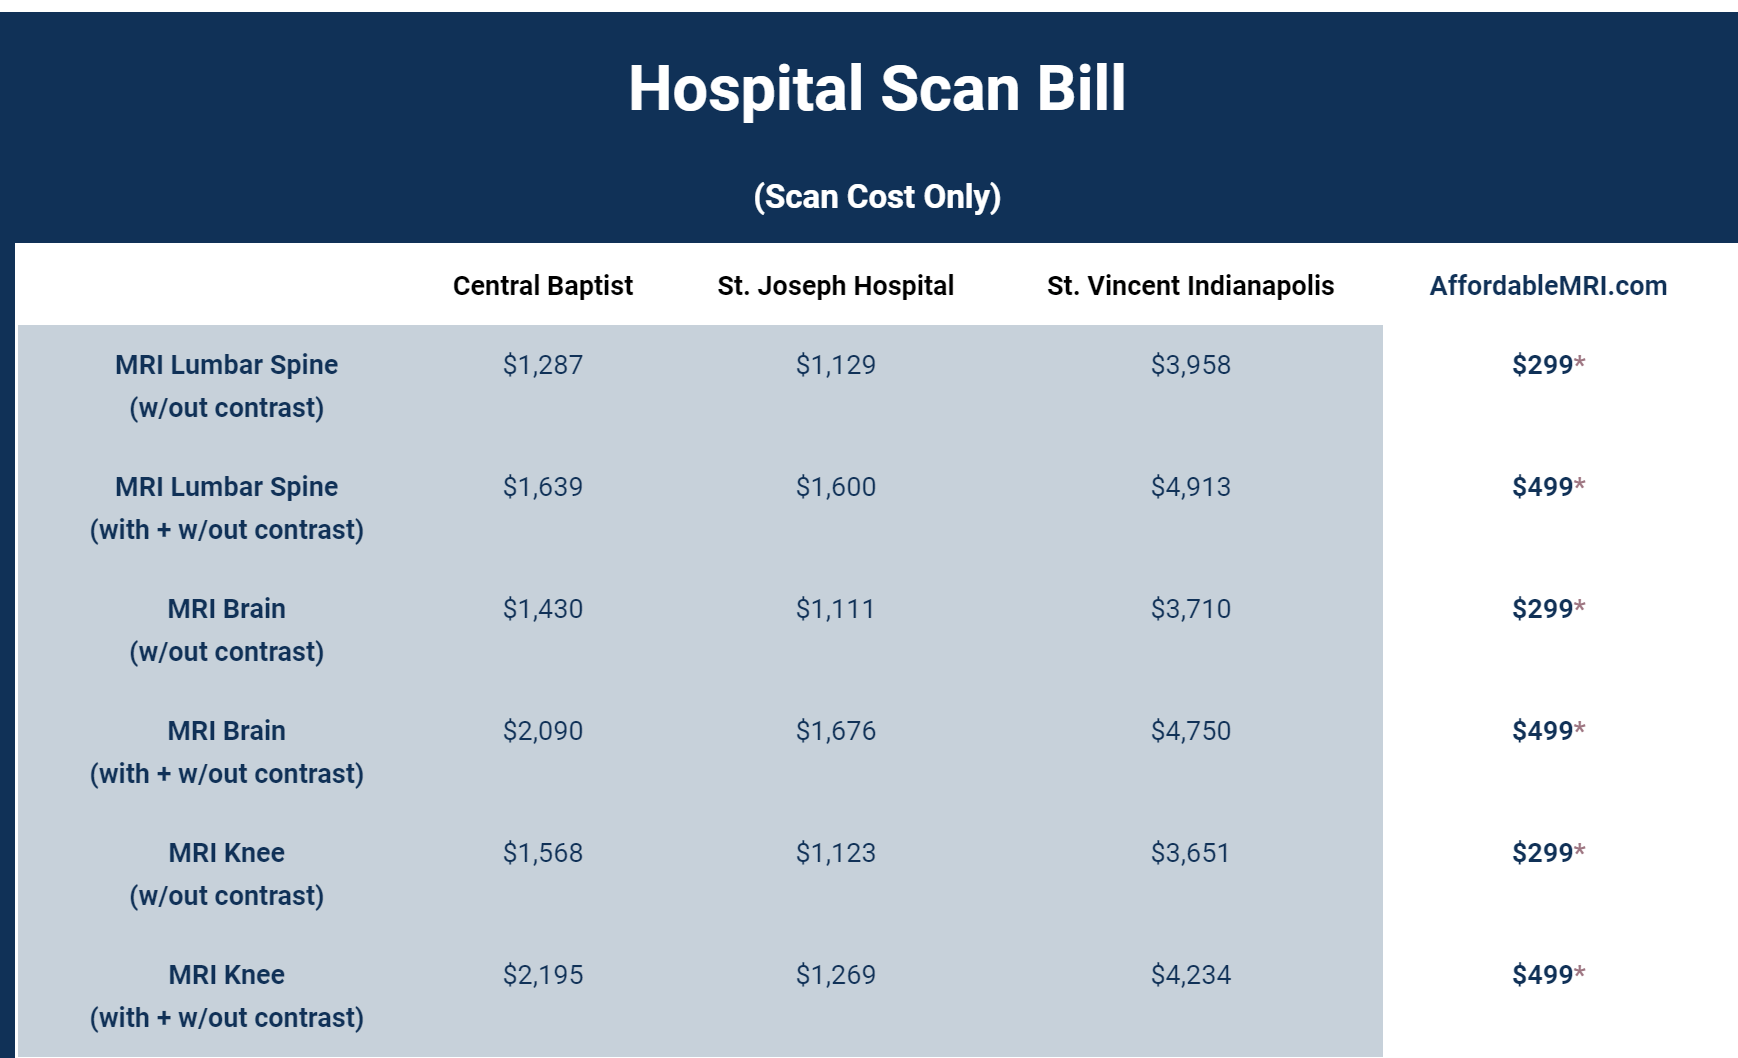 Affordable MRI pricing